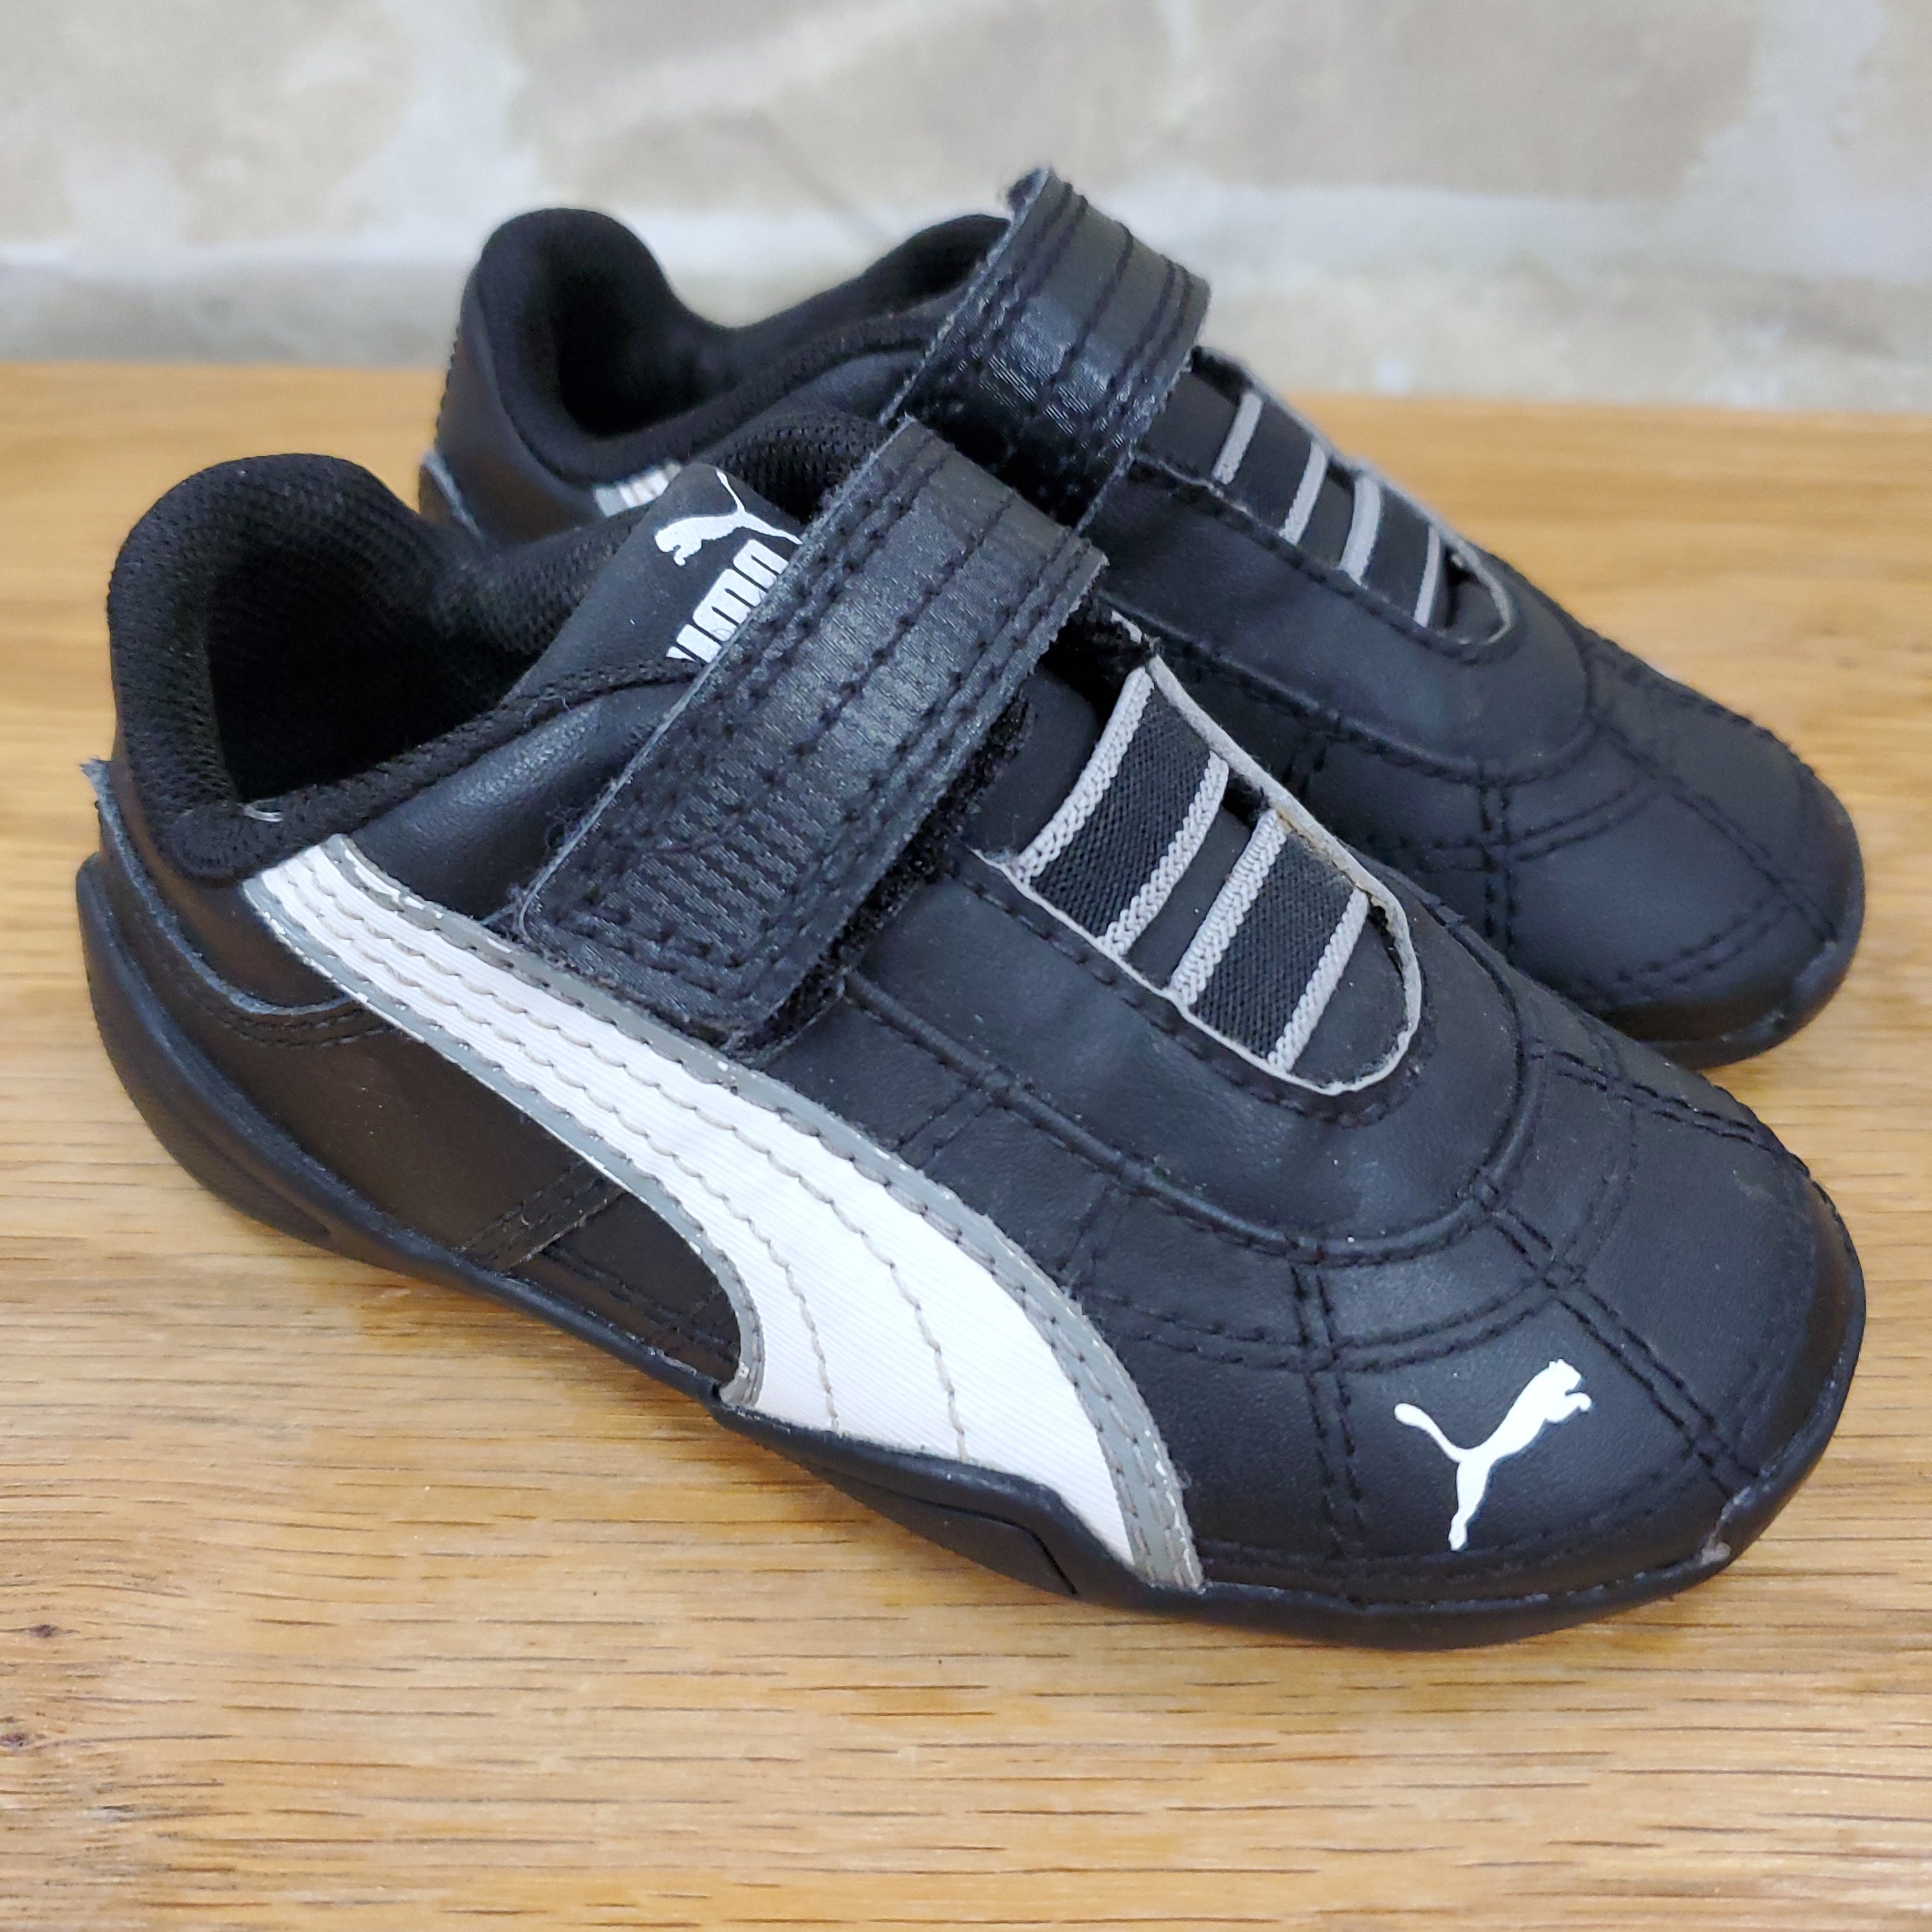 Puma boys tennis shoes black velcro 5